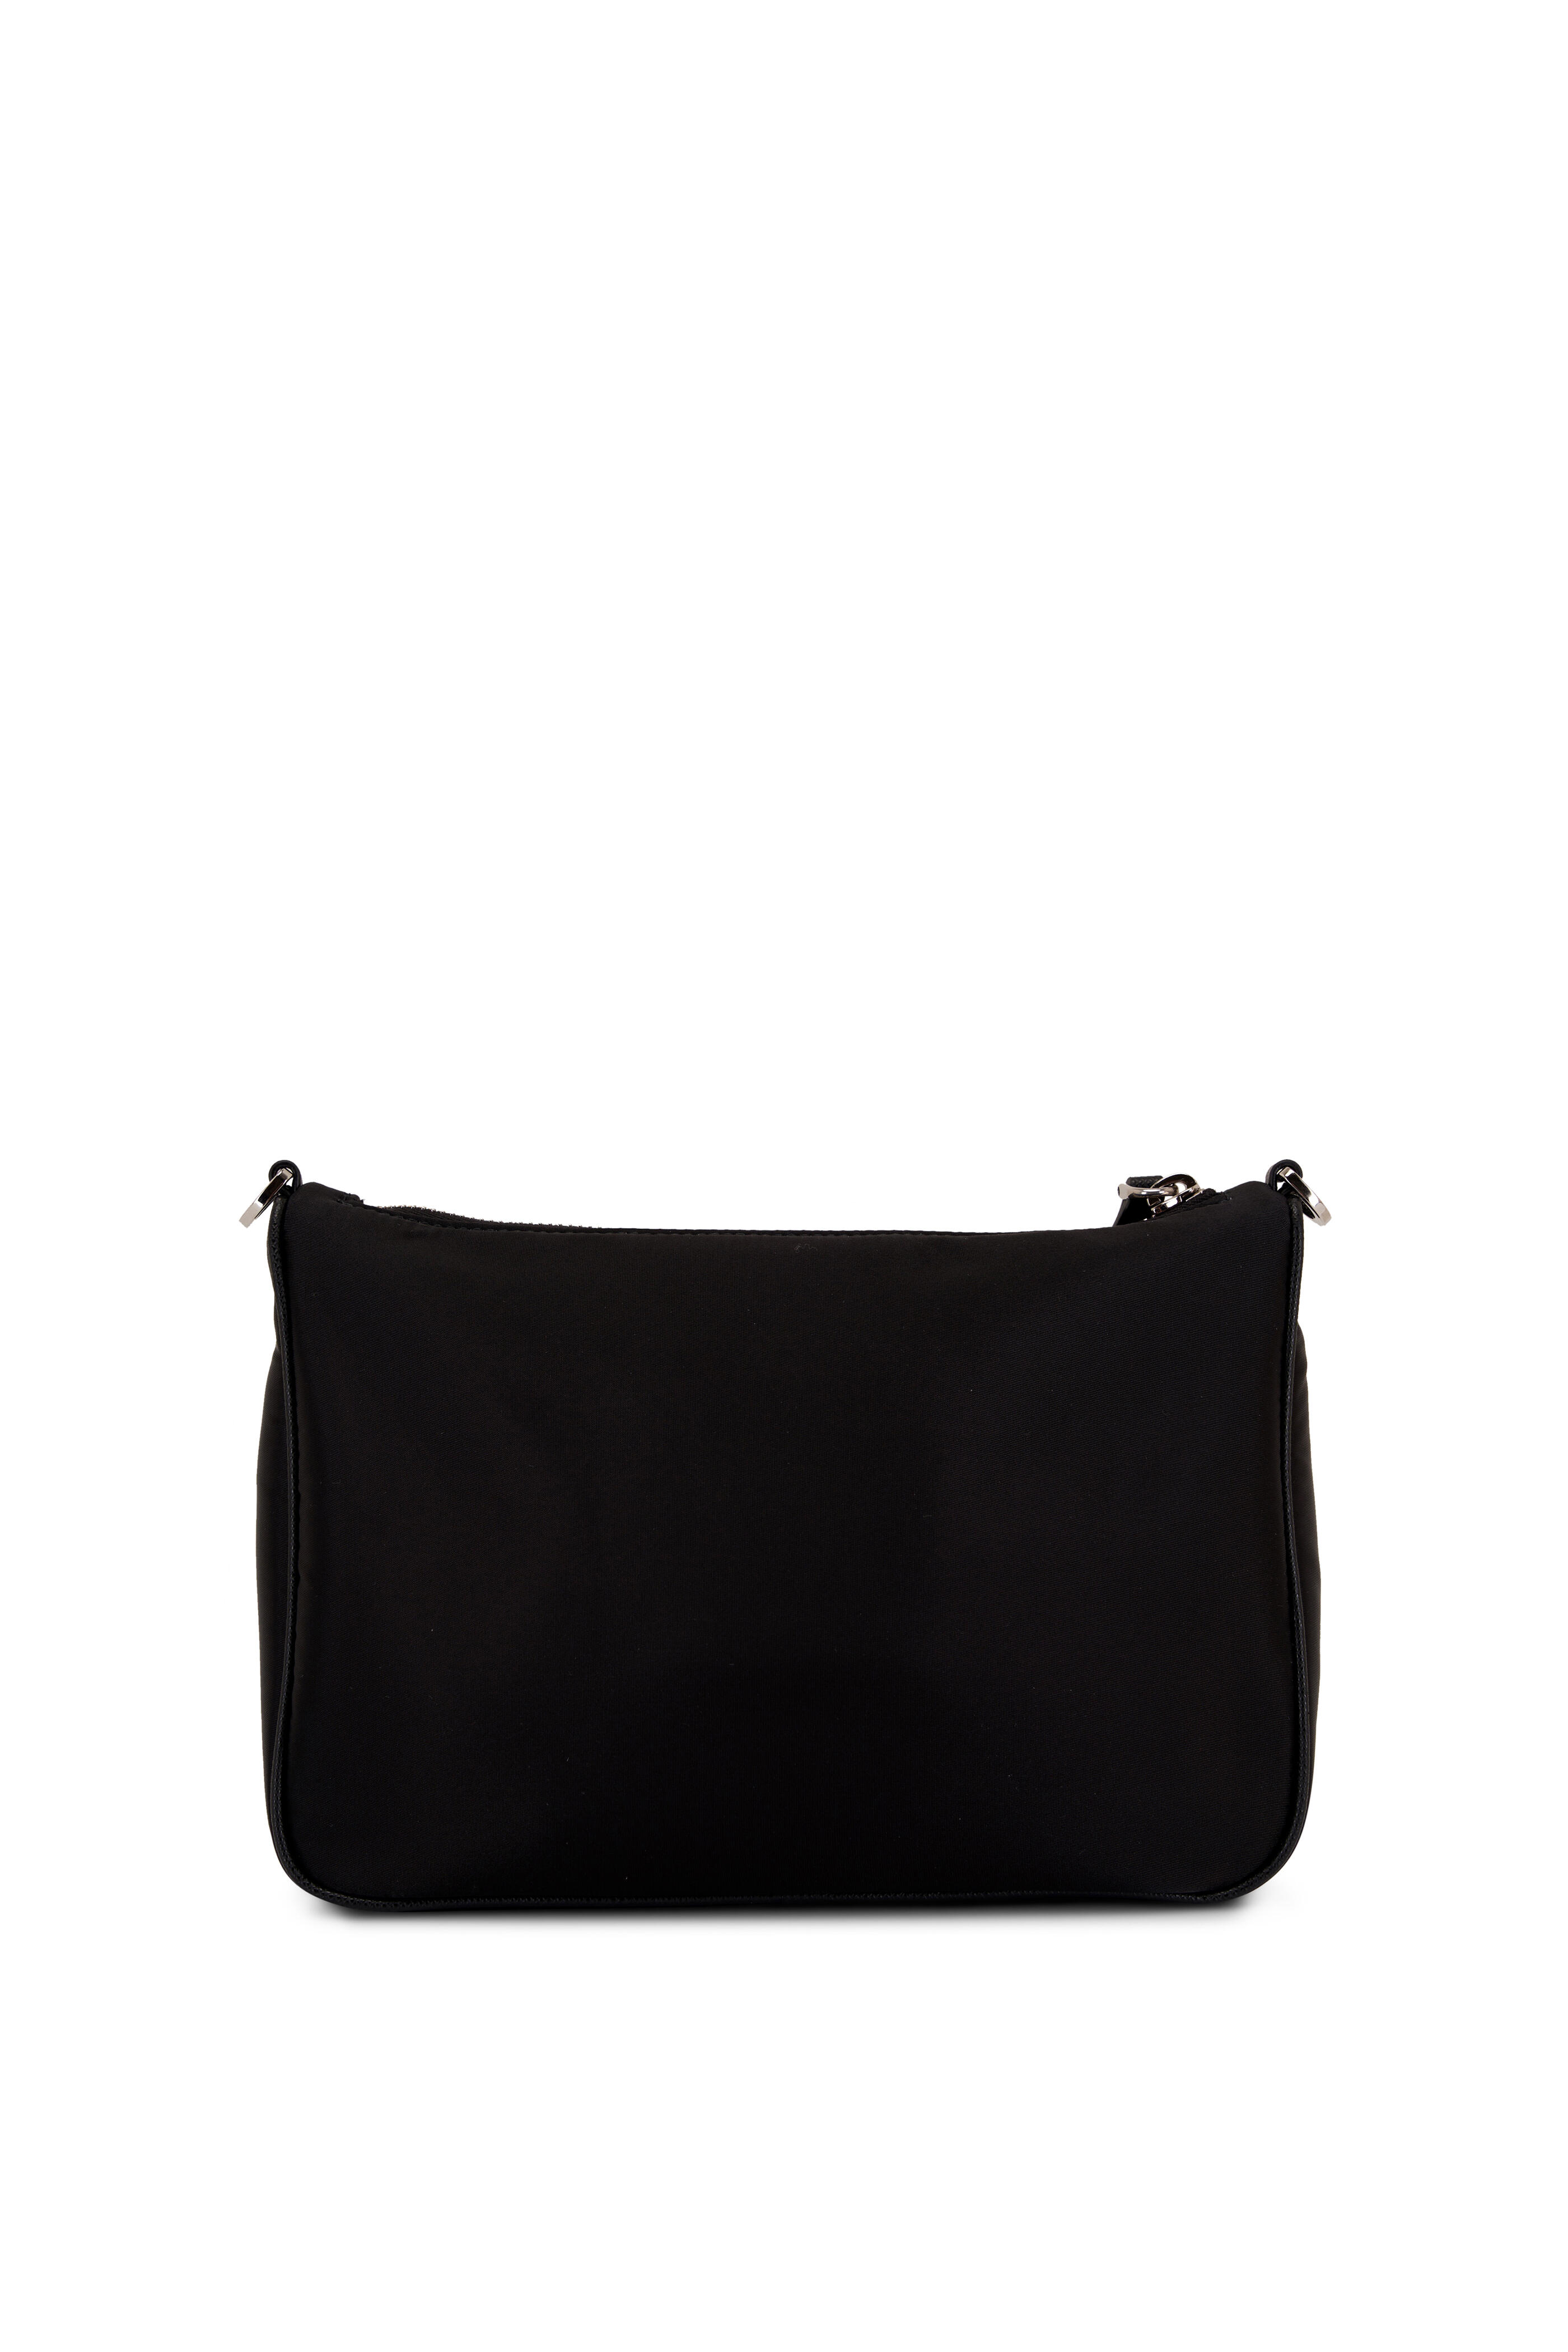 Prada Black Re-Nylon cross-body bag